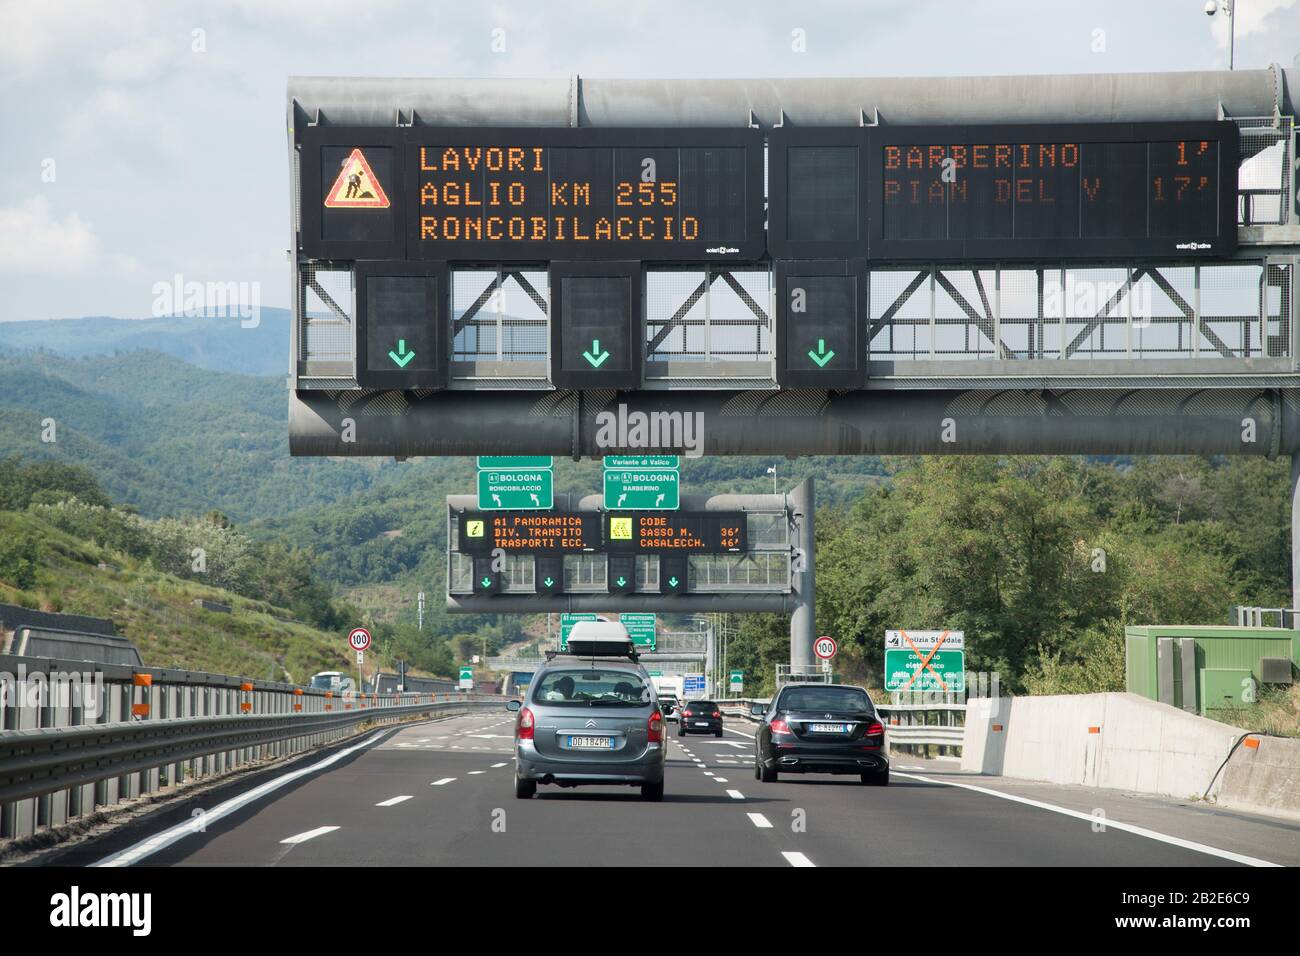 A1 Panorama und A1 Direttissima der Autostrada A1 Milano-Napoli genannt Autostrada del Sole in Florenz, Toskana, Italien. August 2019 © Wojciech St Stockfoto